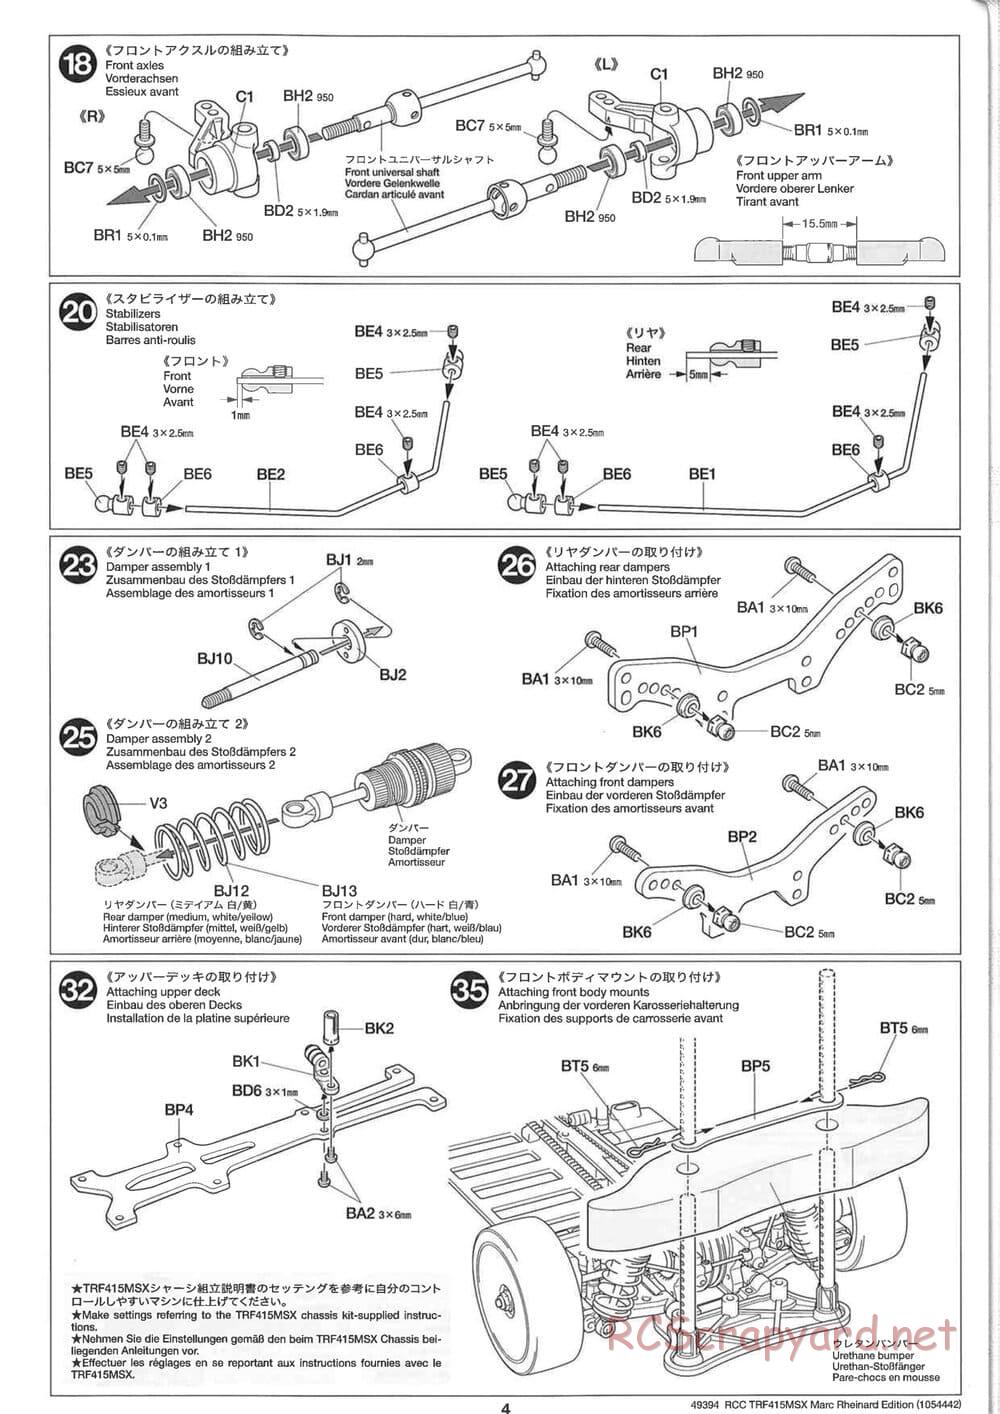 Tamiya - TRF415-MSX Marc Rheinard Edition Chassis - Manual - Page 4